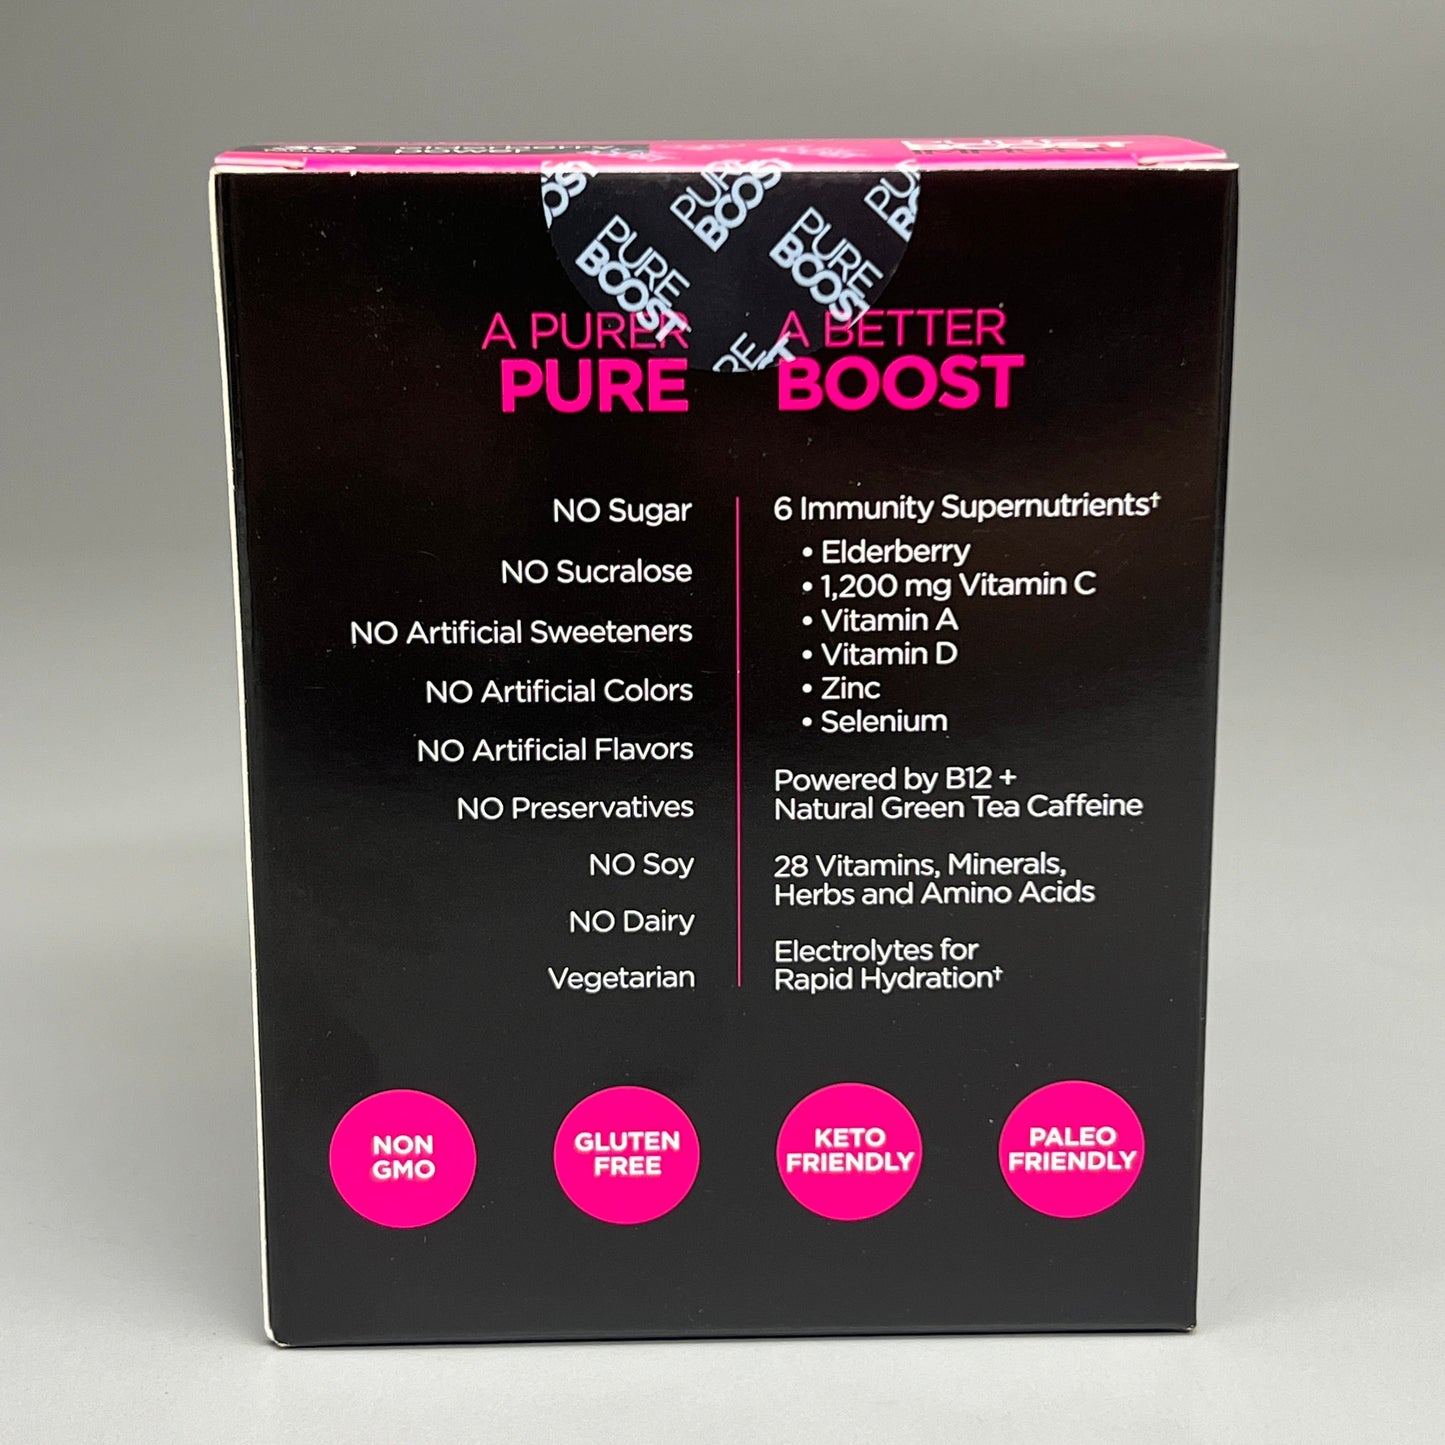 ZA@ PUREBOOST IMMUNE Antioxidant Energy Mix 12 Boxes of 30 Packets Elderberry Power Exp 04/24 (New)